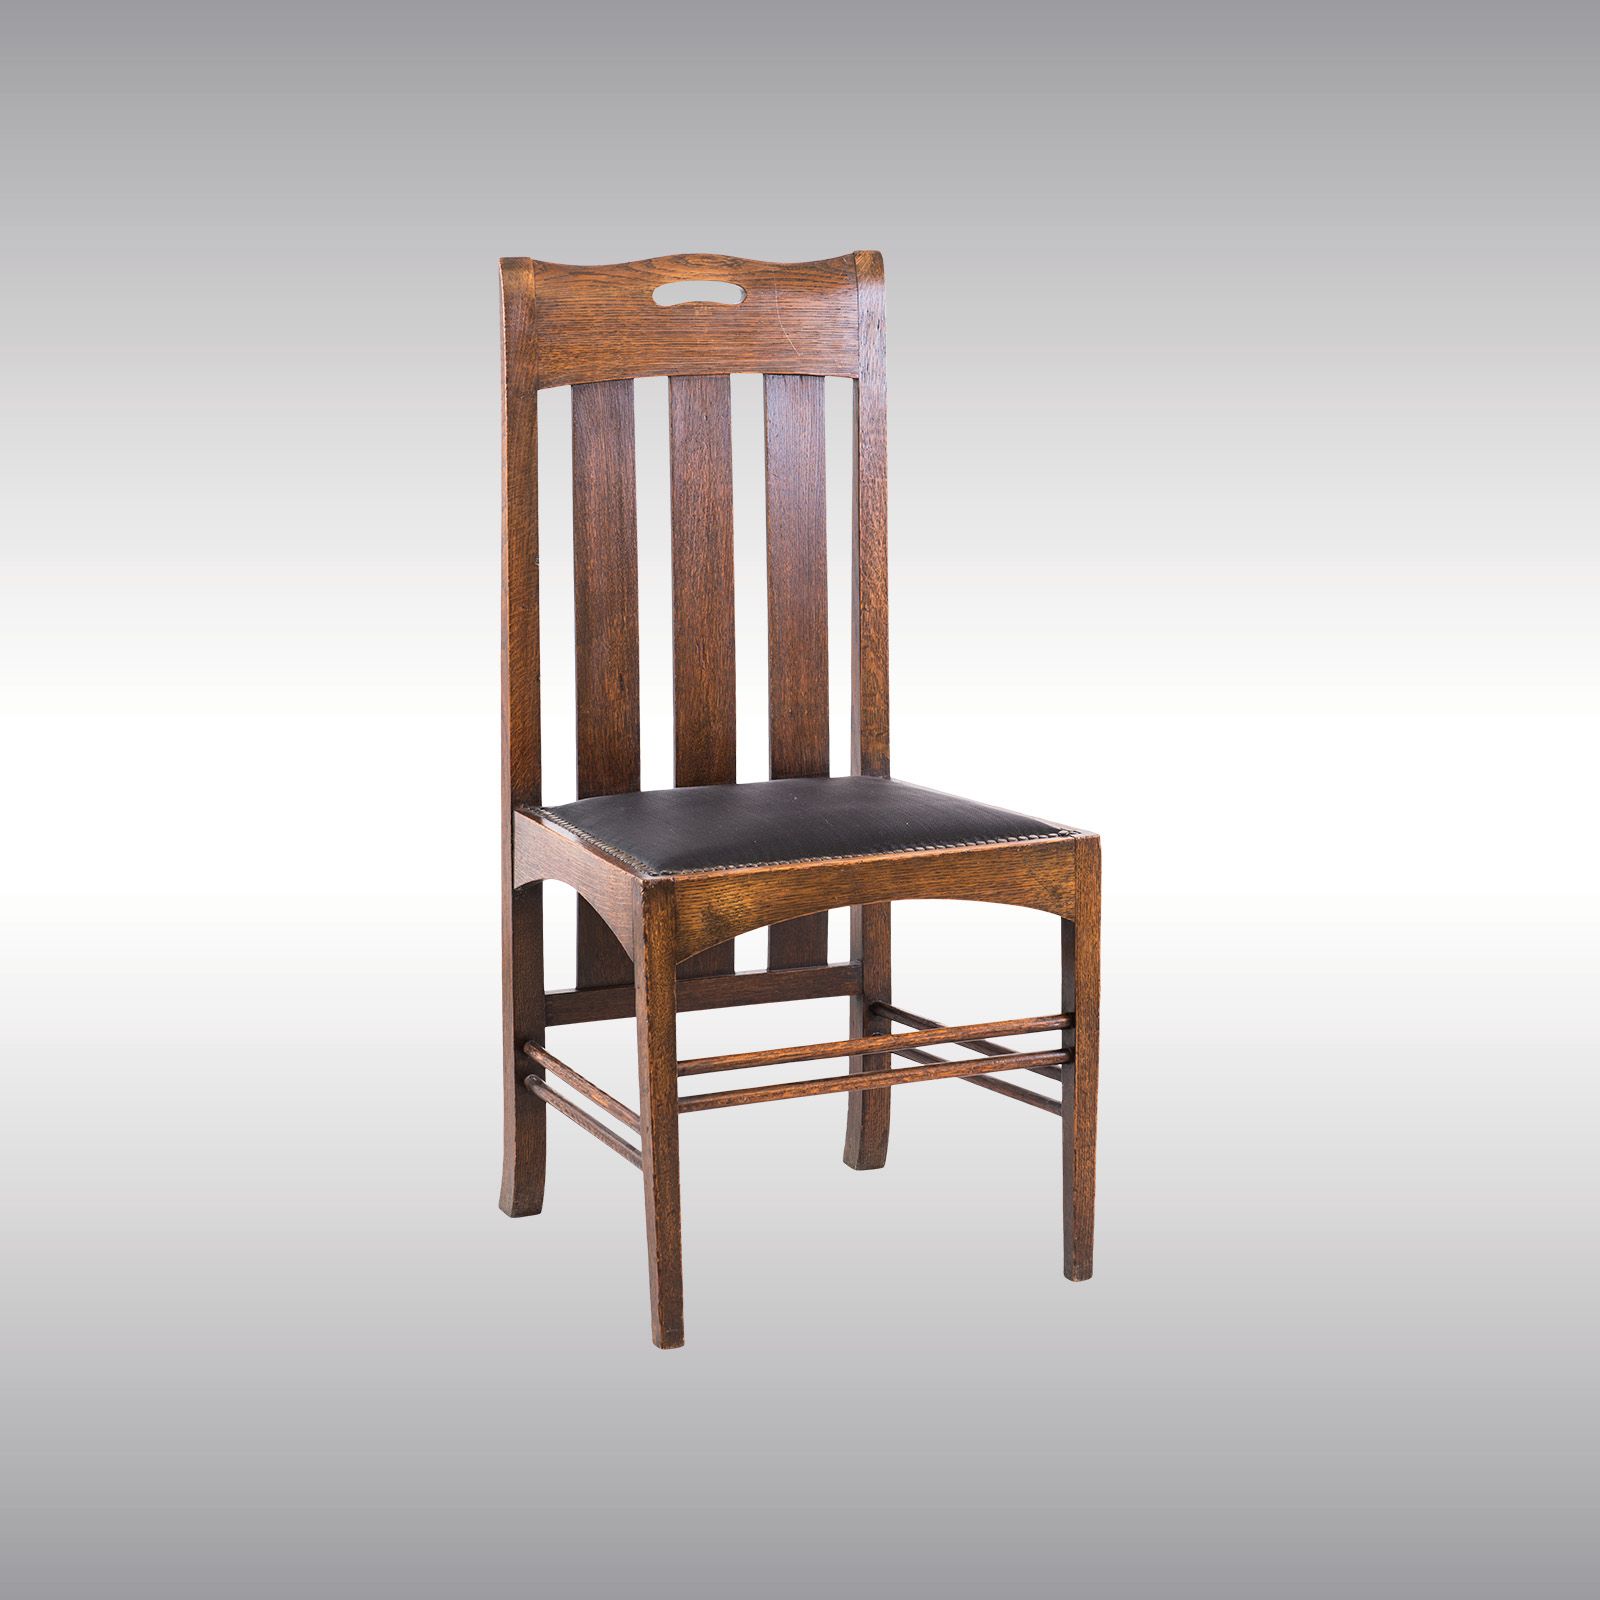 WOKA LAMPS VIENNA - OrderNr.: 80085|Low-Back Chair from the Argyle Street Tea Room Glasgow - Design: Charles Rennie Mackintosh